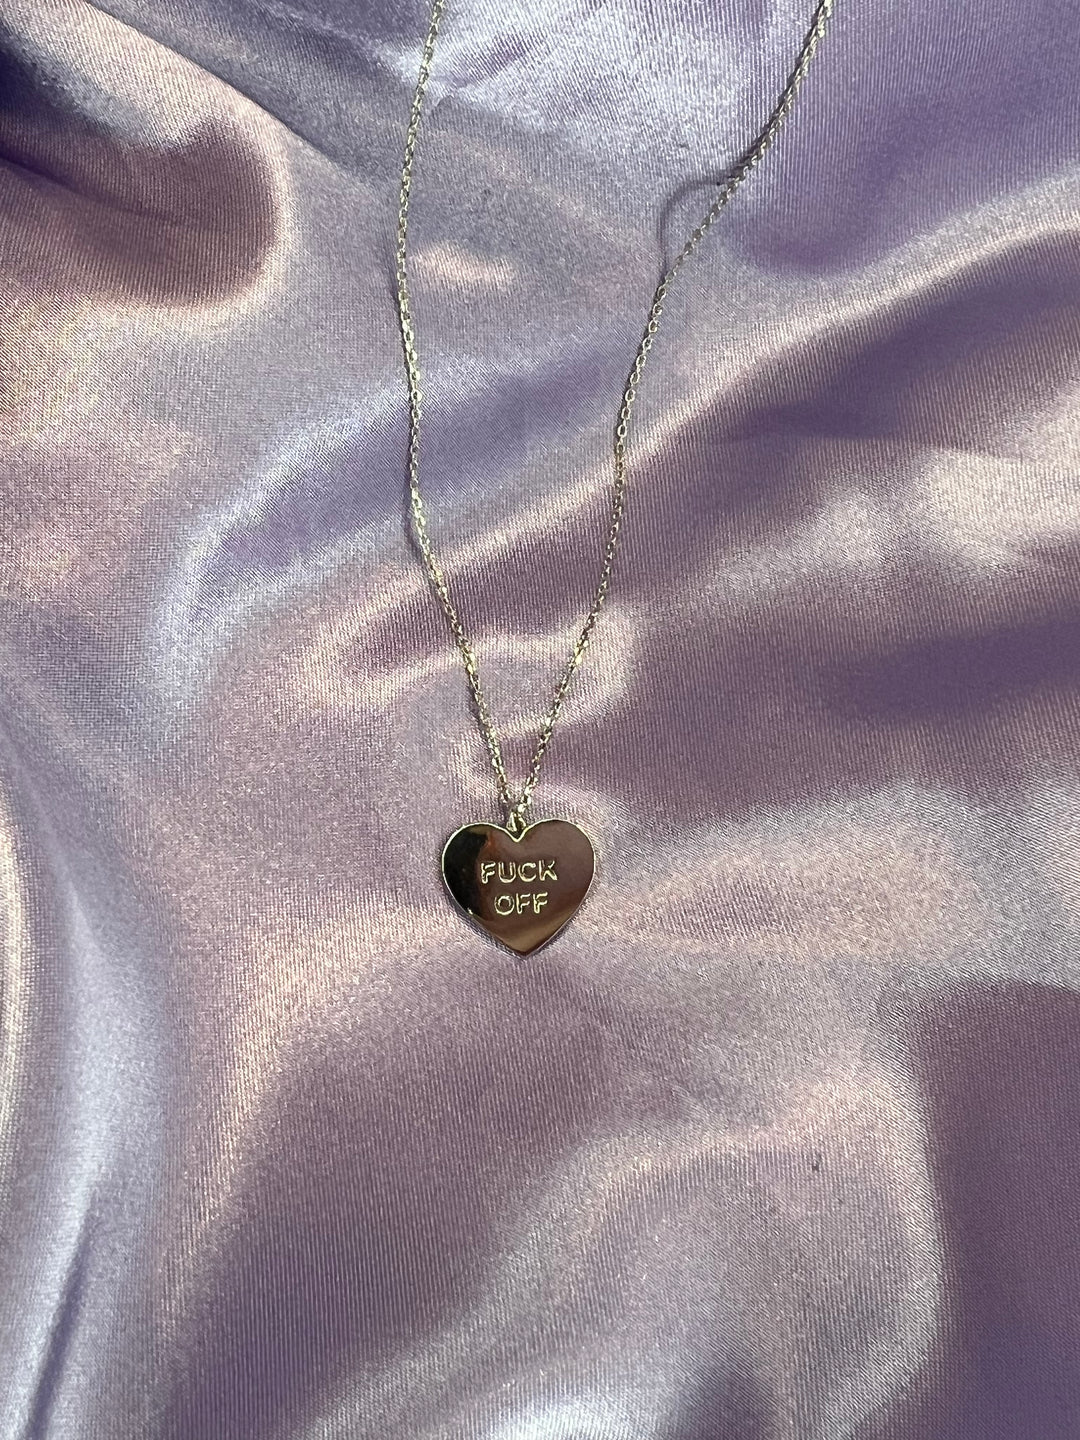 Fuck Off Heart Pendant Necklace, Silver